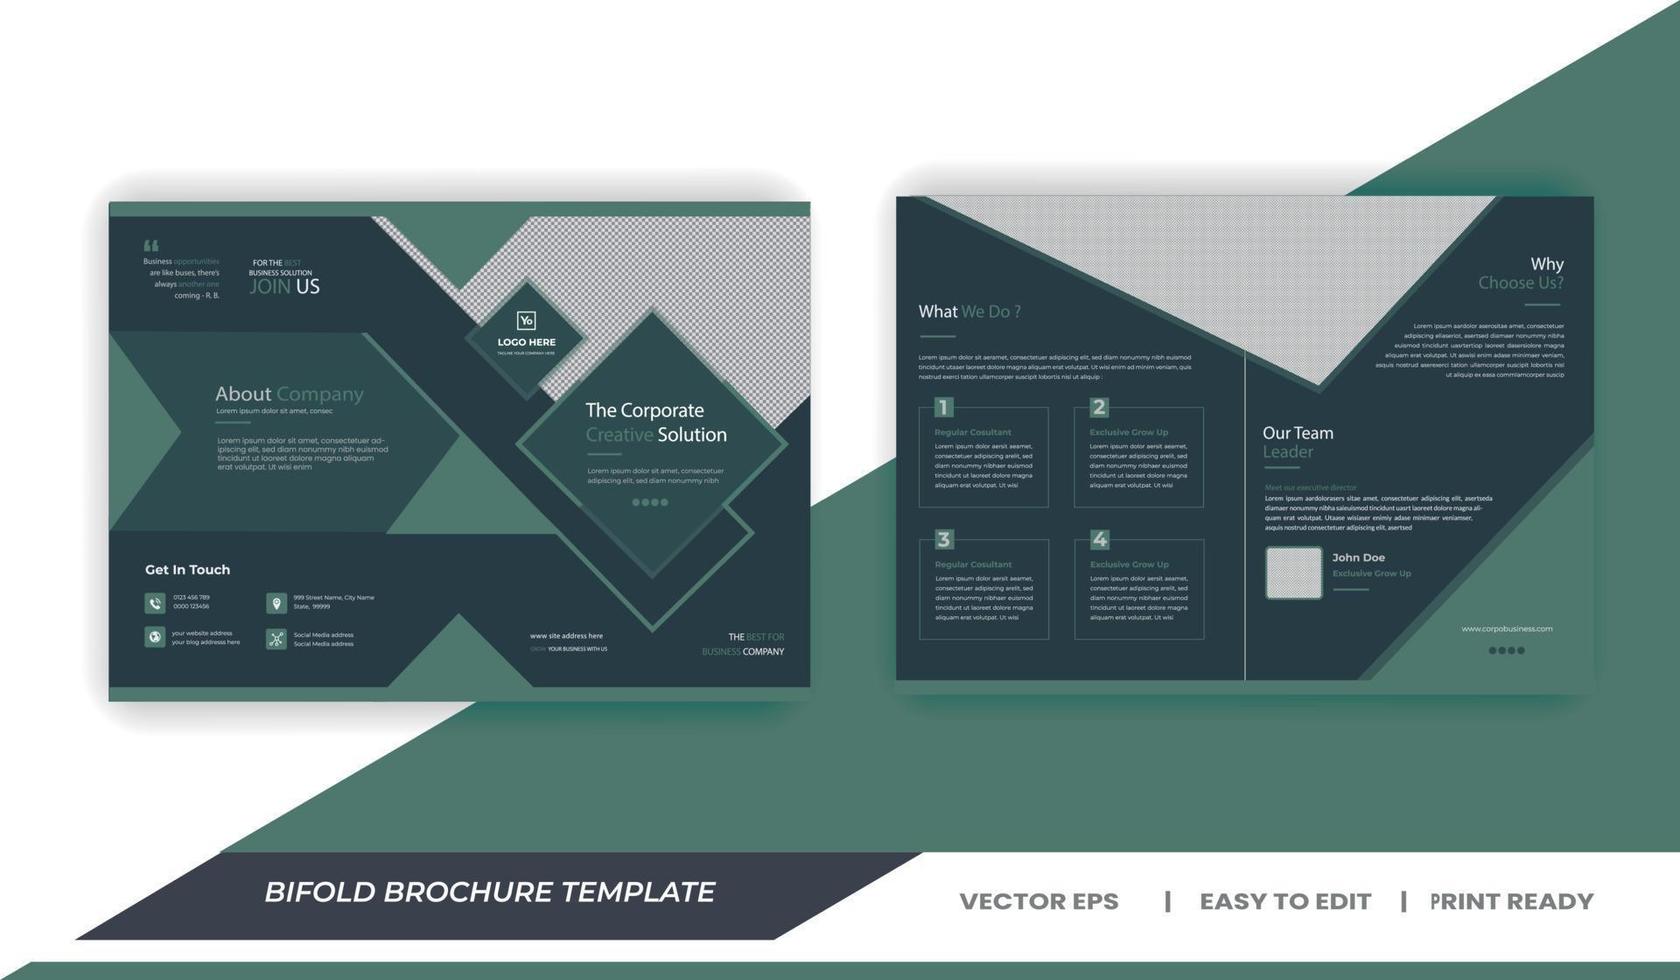 Bifold Brochure Template - Professional business brochure, bi fold template,cover page, half fold brochures - corporate brochure - 03 vector